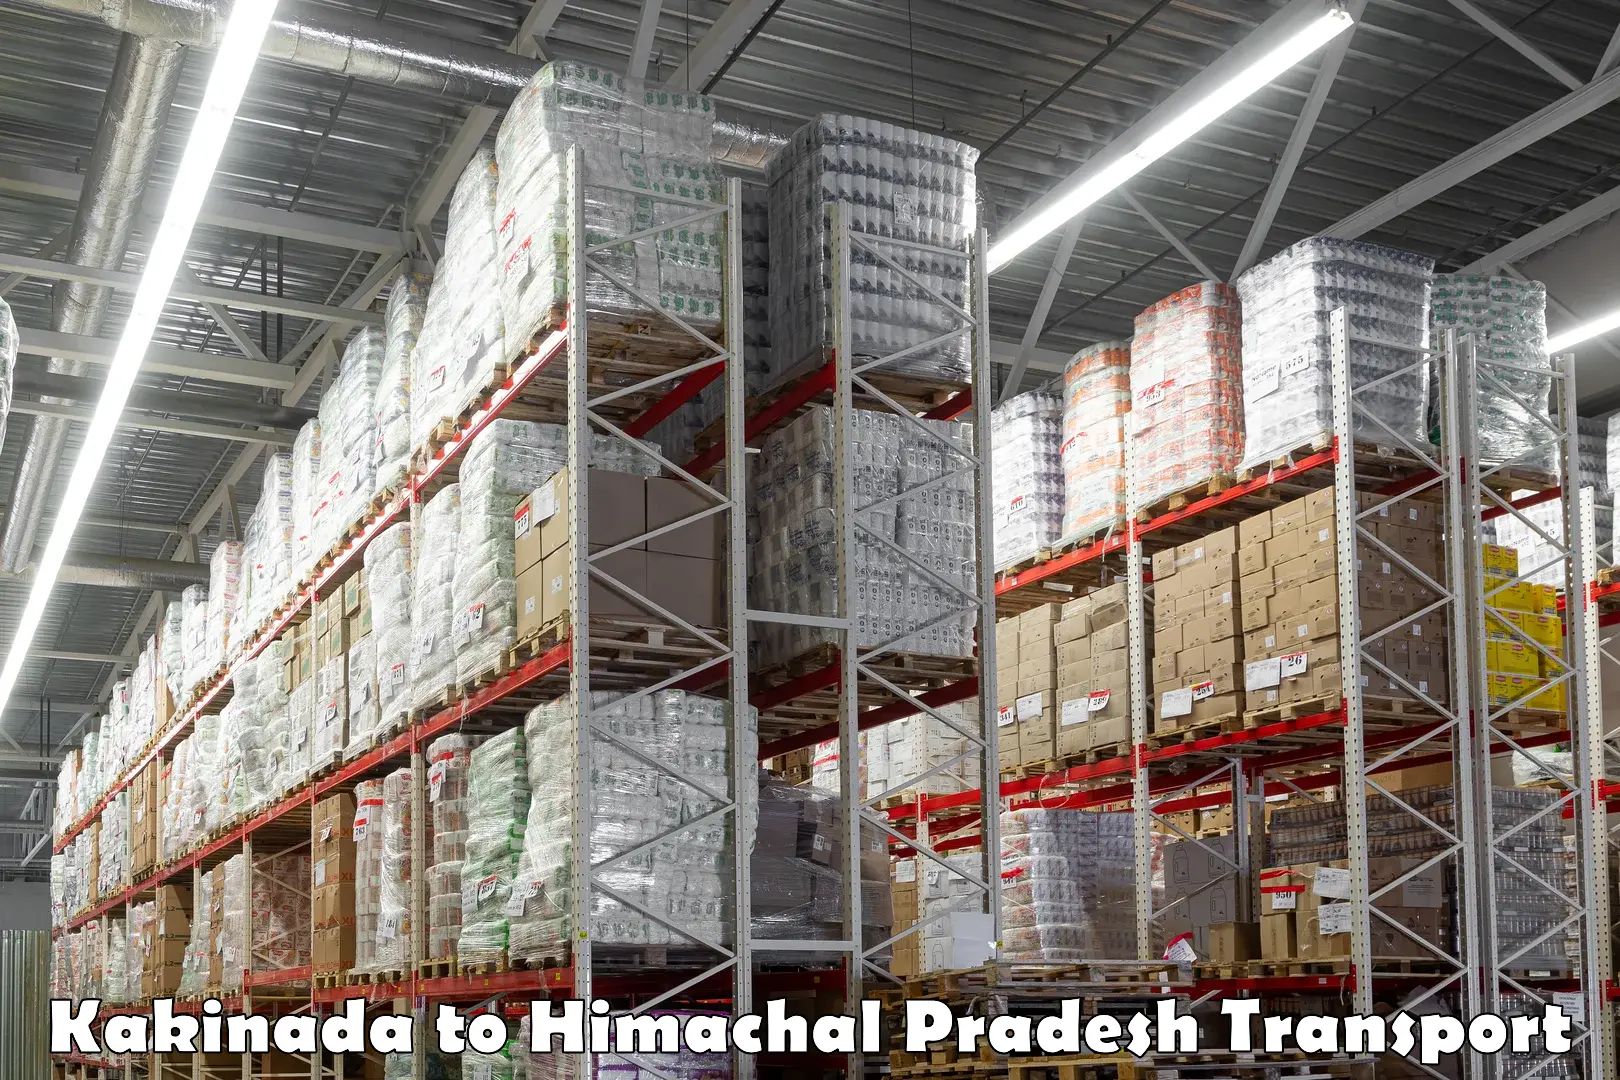 Truck transport companies in India Kakinada to Nadaun